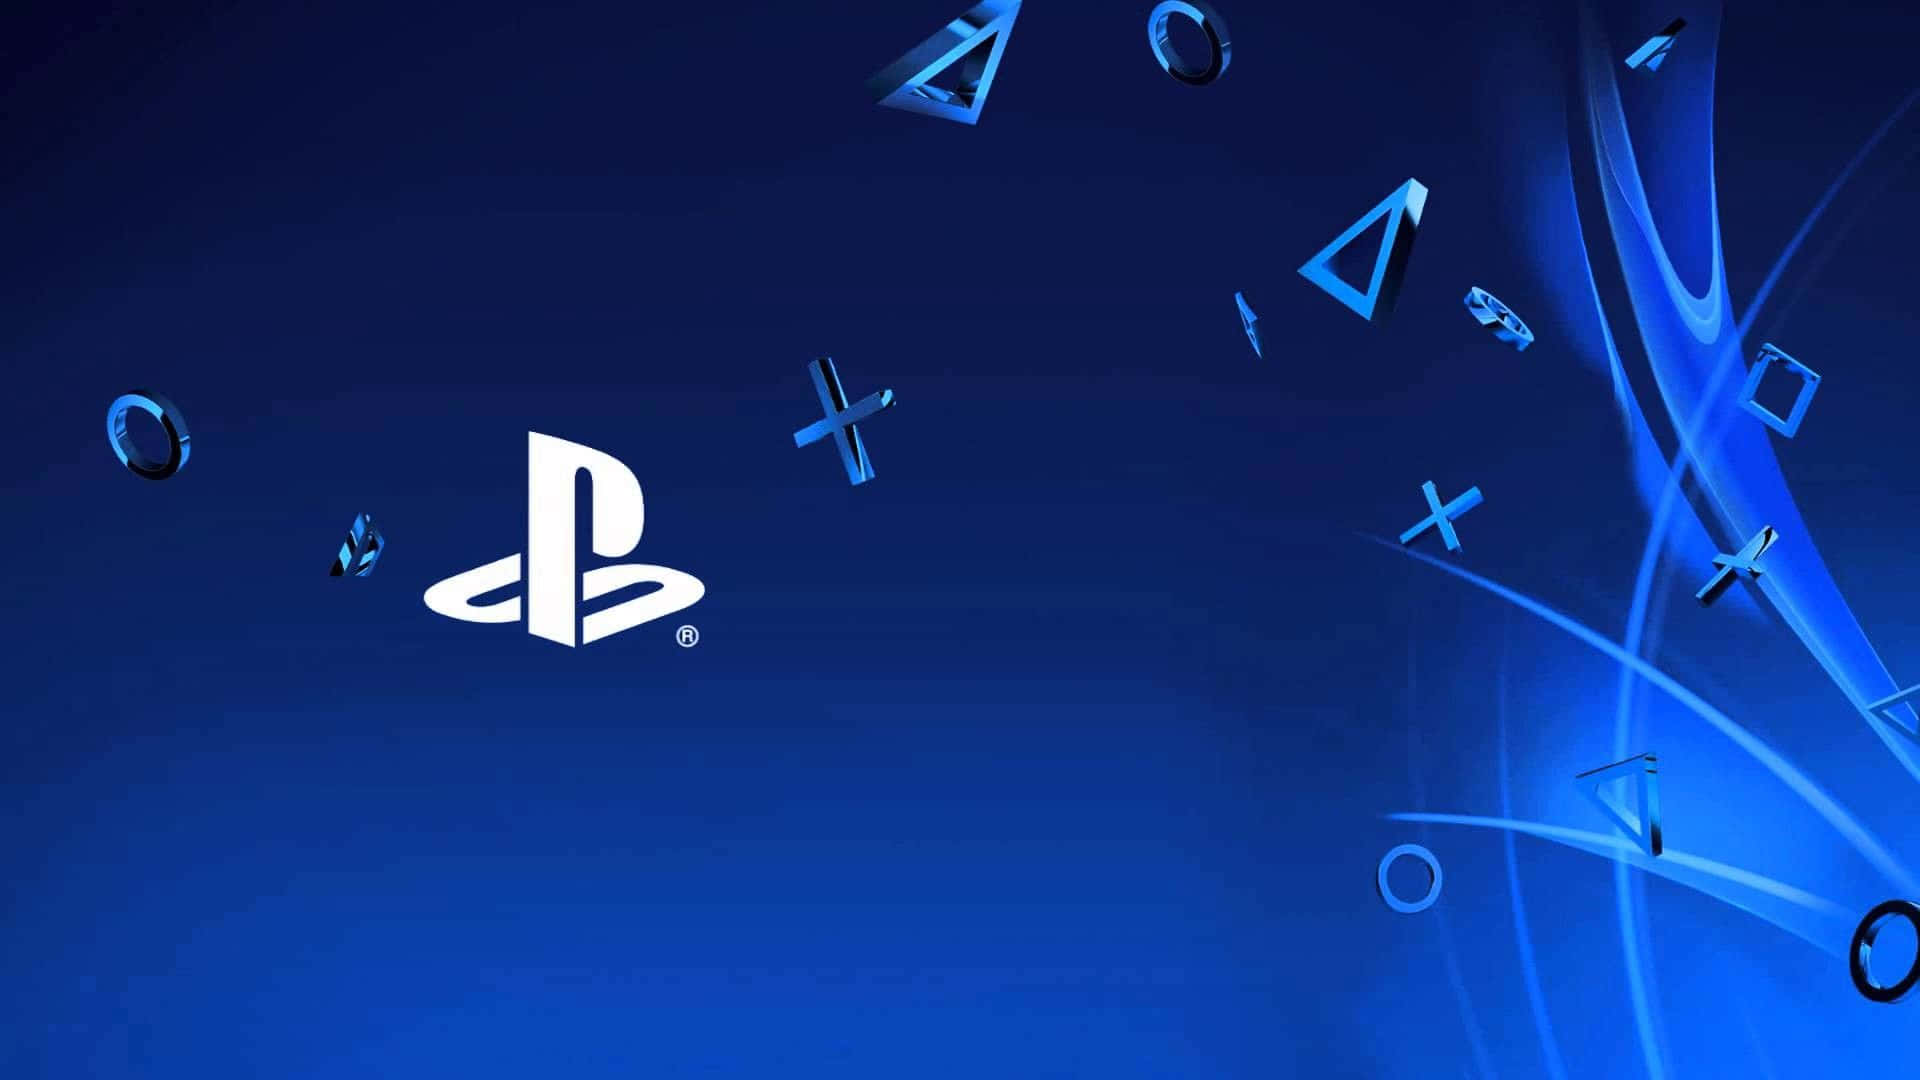 Ouçao Som E Sinta O Poder Do Sony Playstation 4